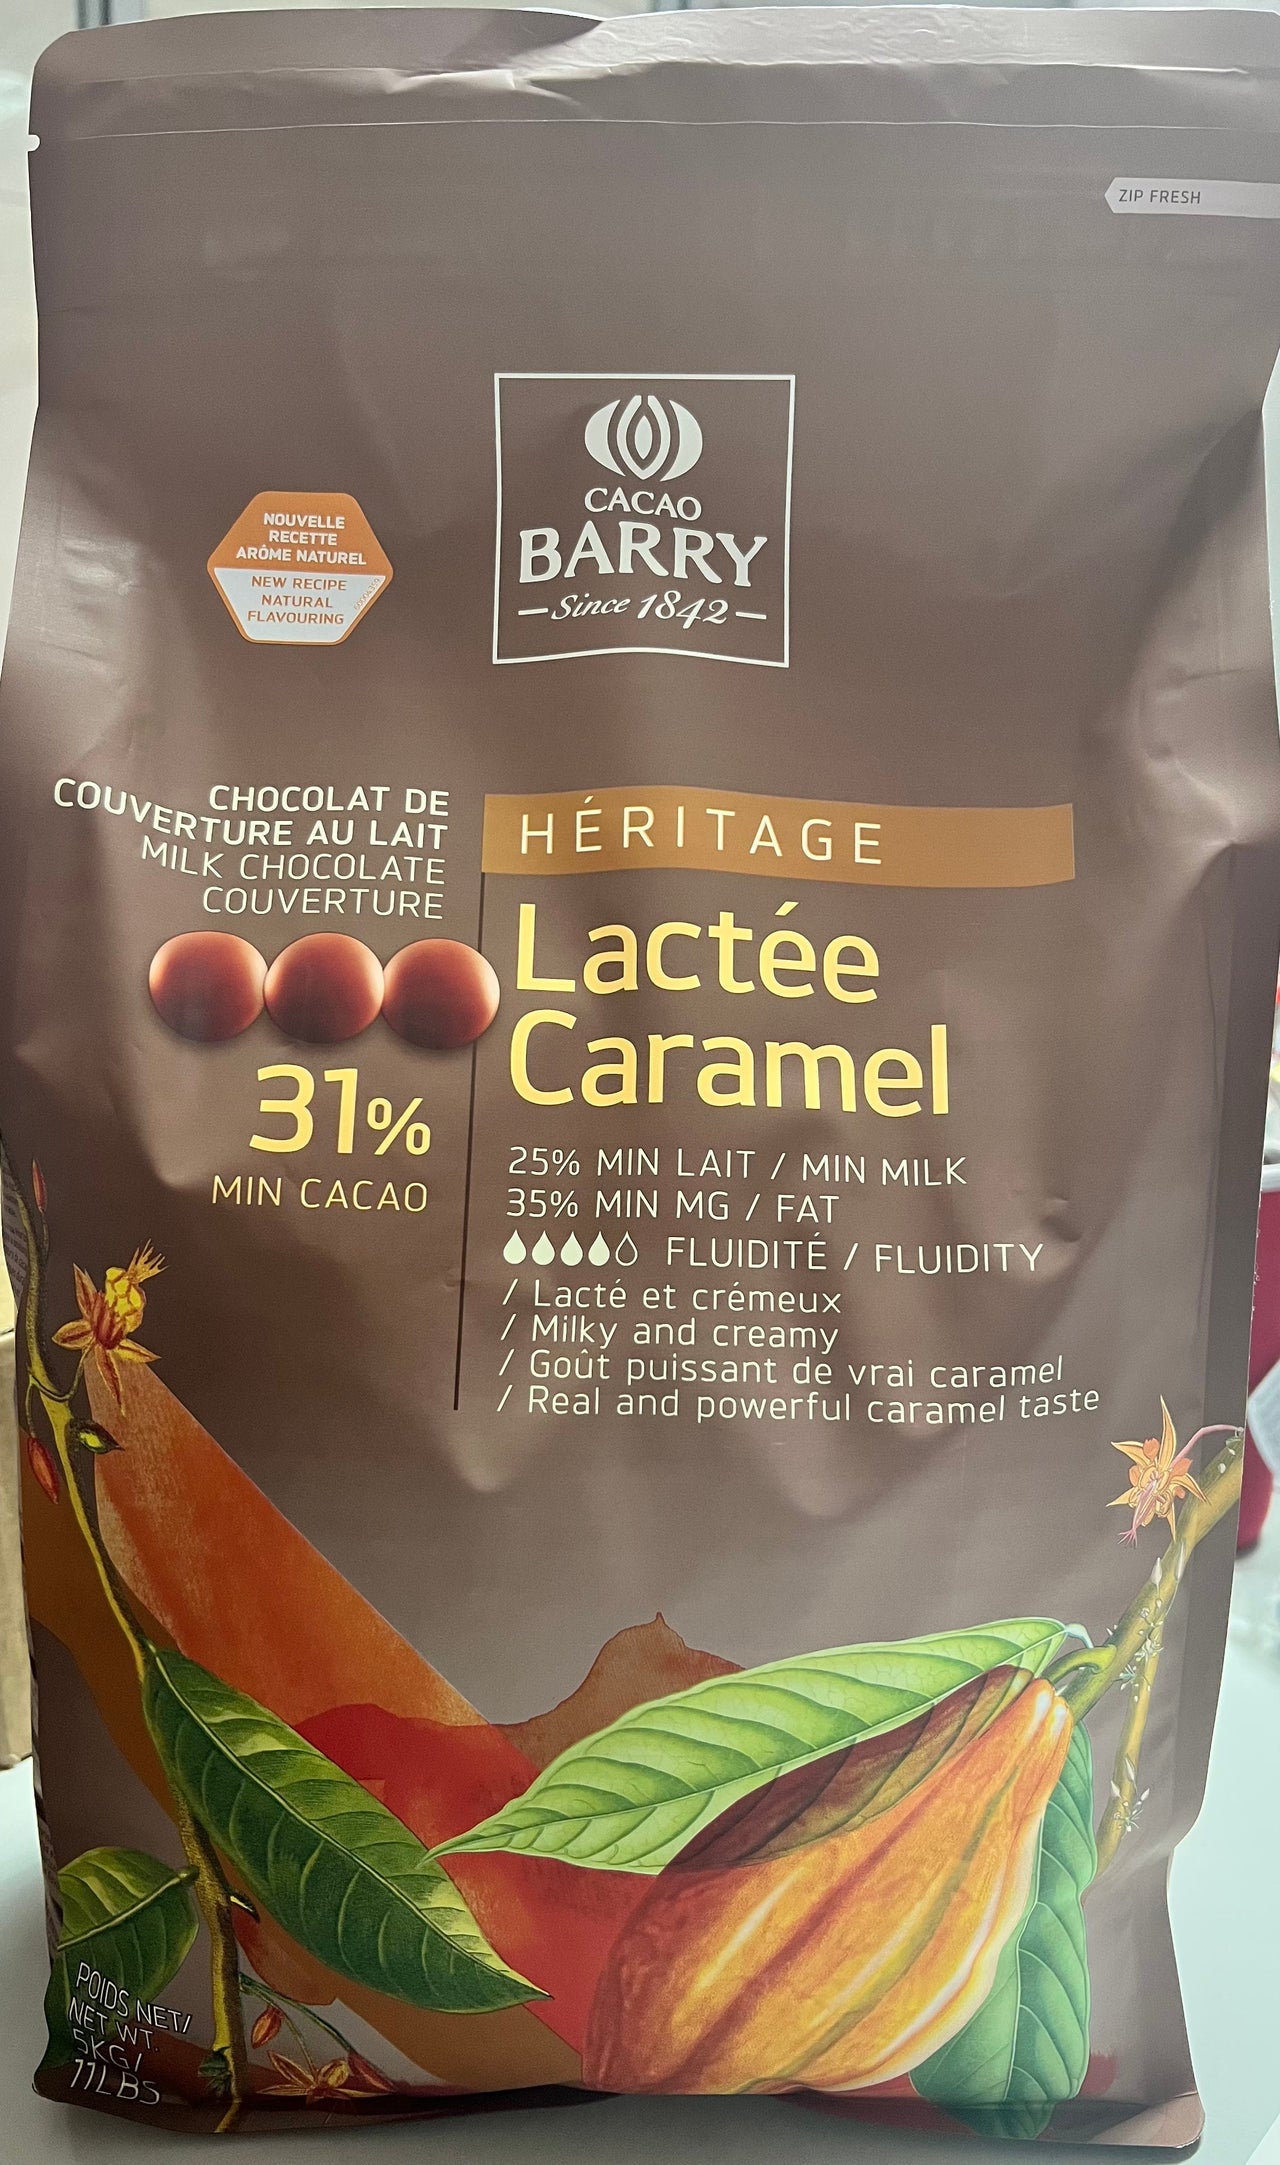 Chocolates - Chocolate Lactée Caramel (31%) 5kg - Barry